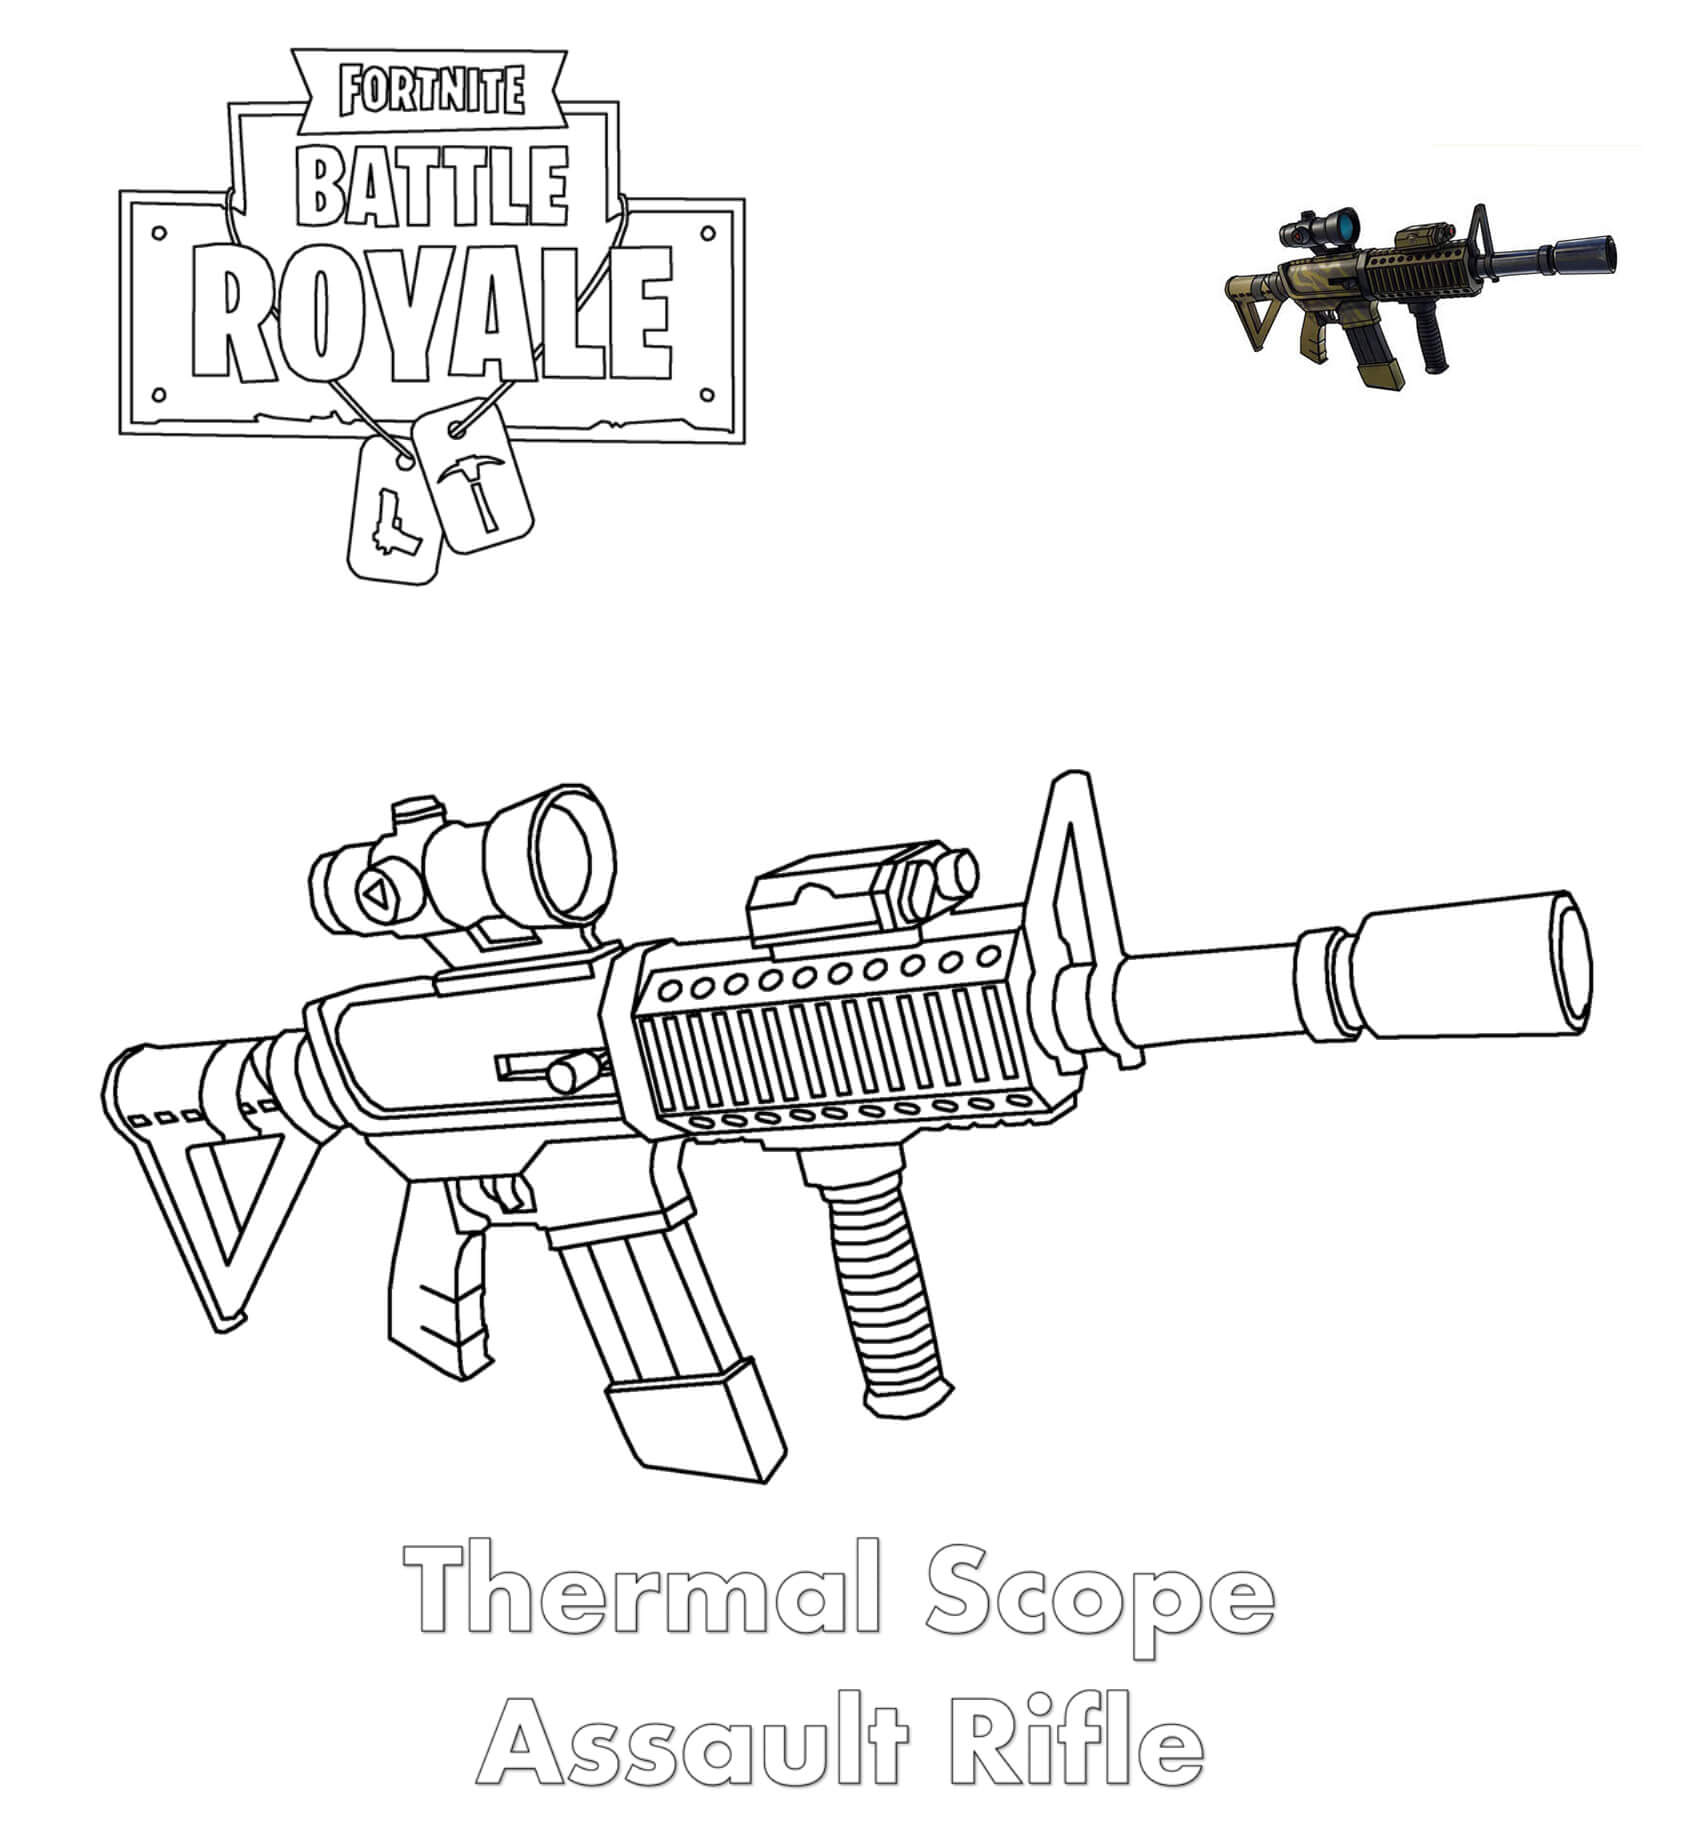 Thermal Scope Assault Rifle Fortnite